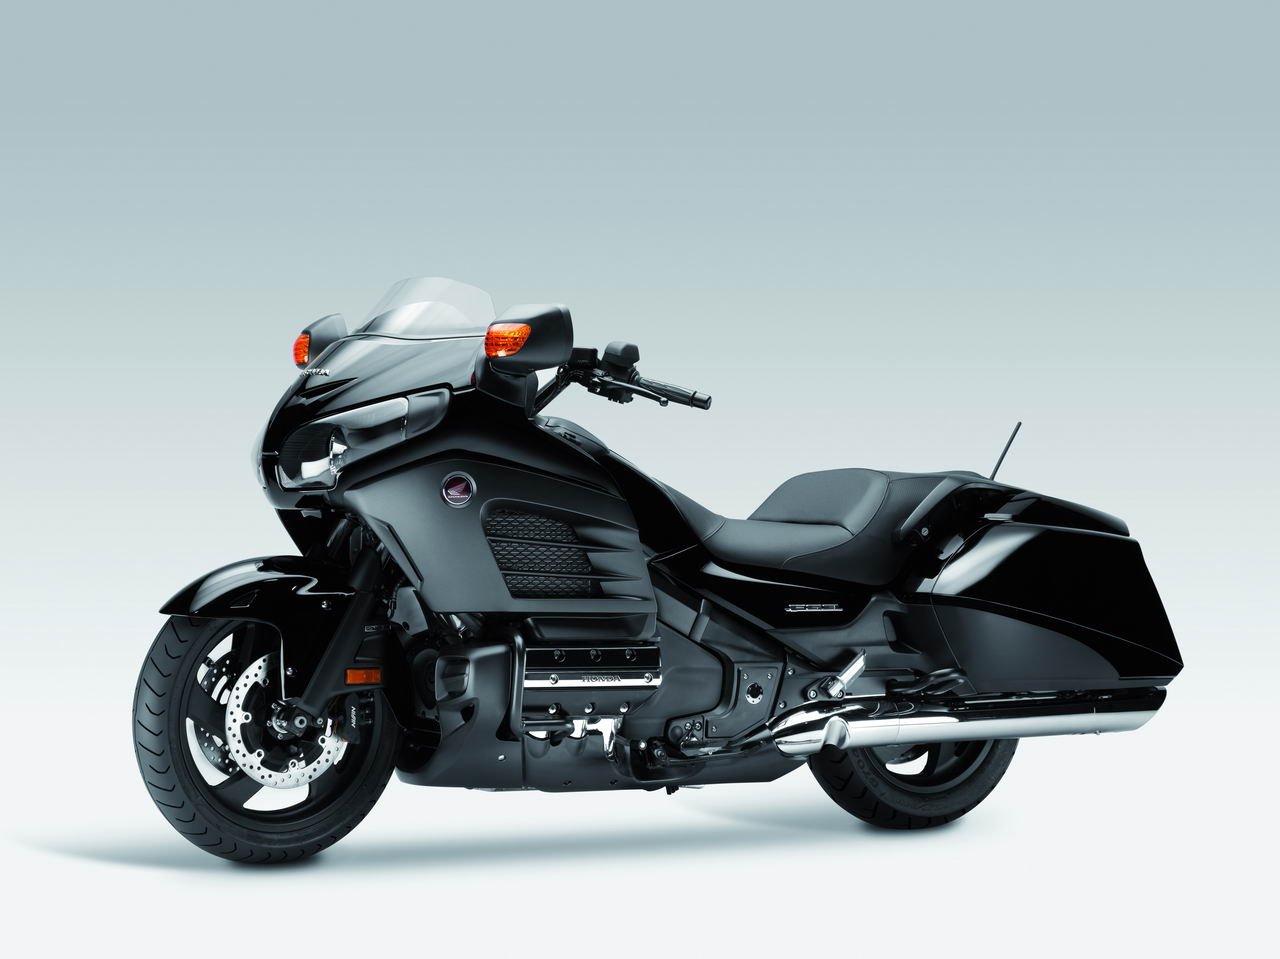 Listino Honda SH300i Special Scooter 150-300 - image 14687_honda-goldwingf6b-bagger on https://moto.motori.net